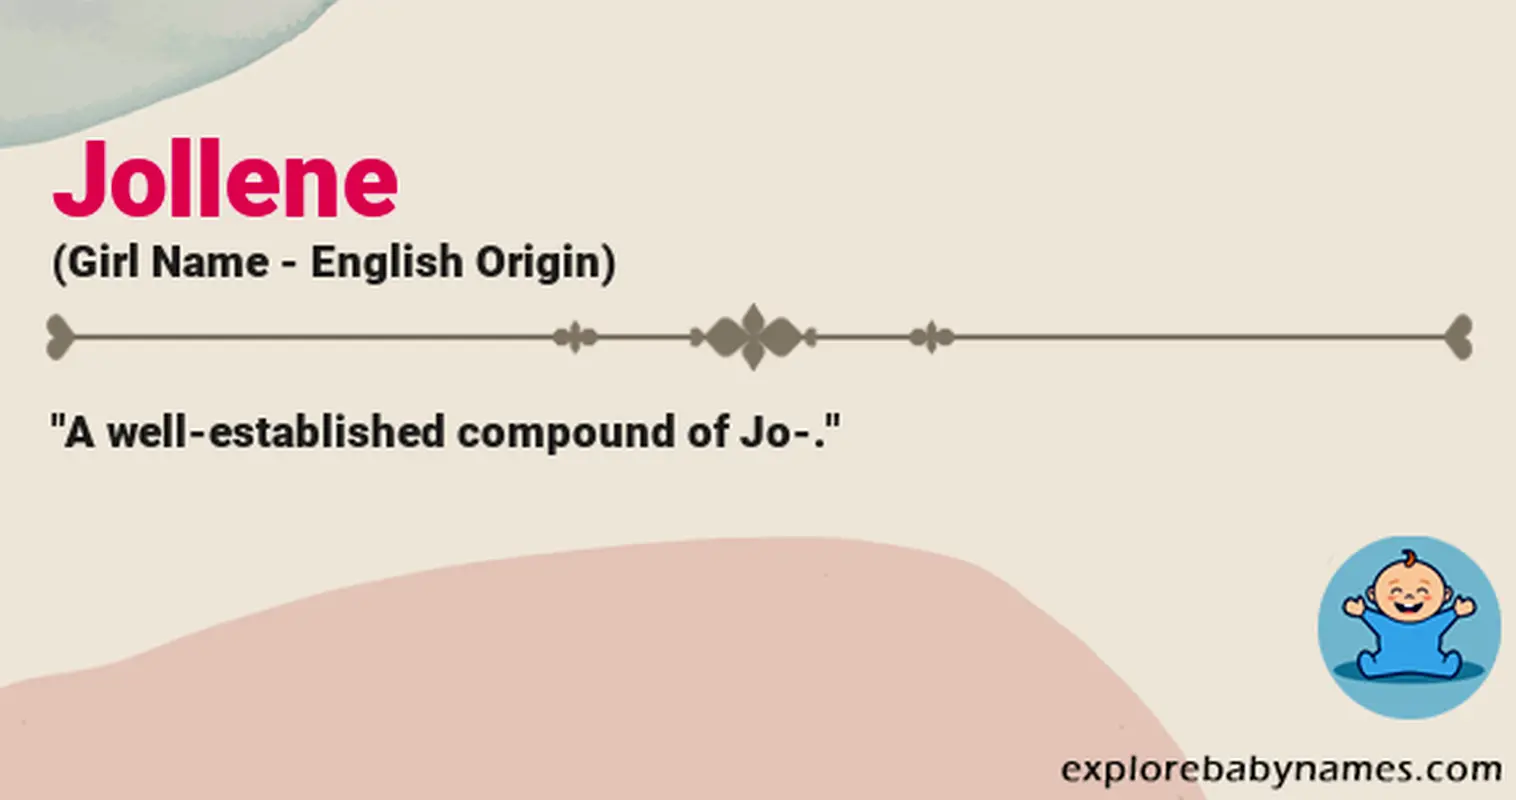 Meaning of Jollene